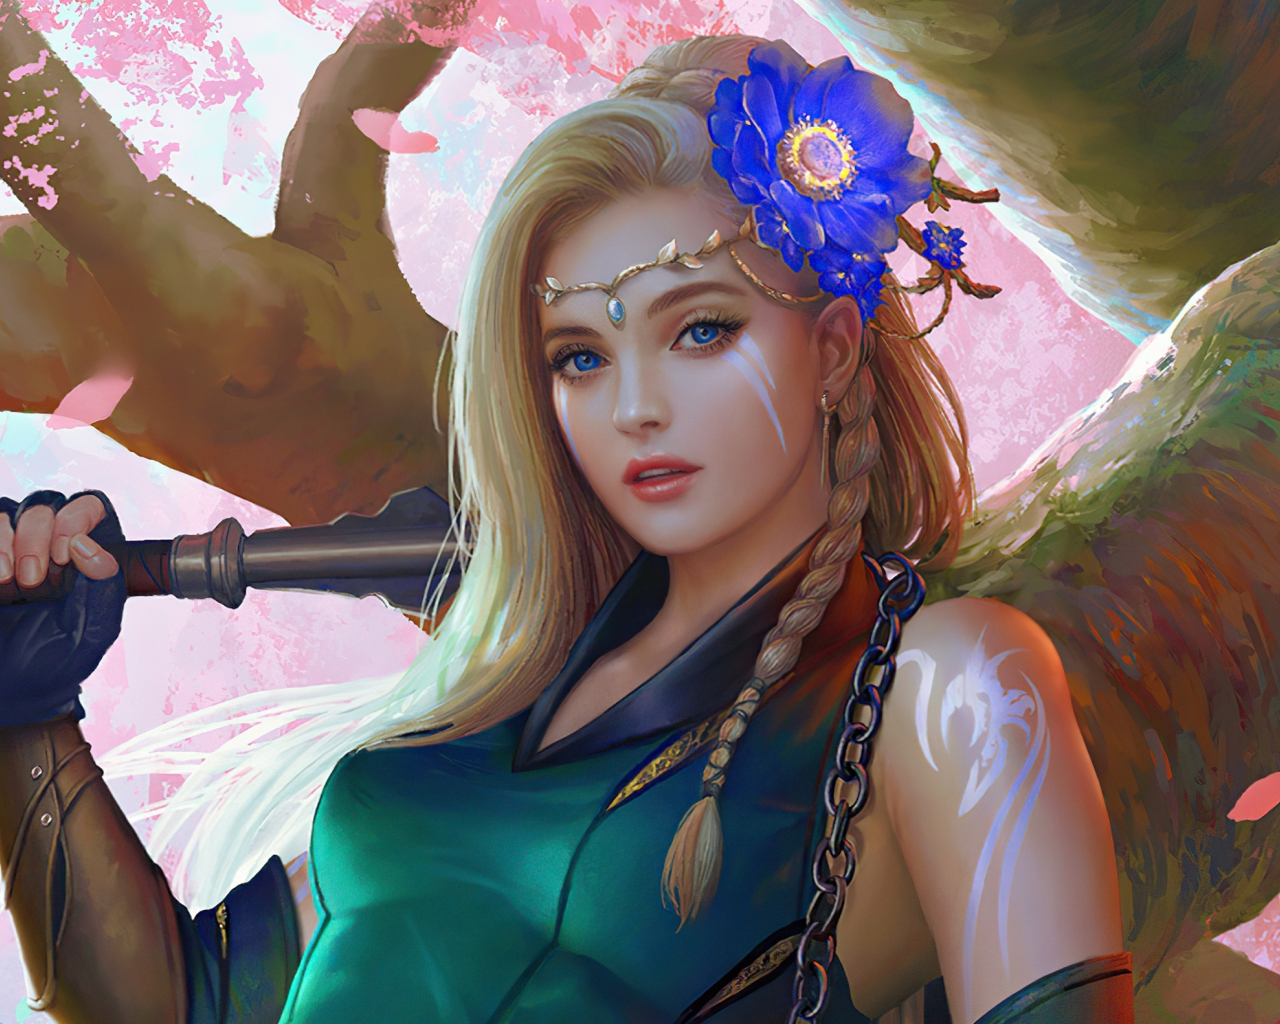 Fantasy girl, warrior, beauty with sword, 1280x1024 wallpaper